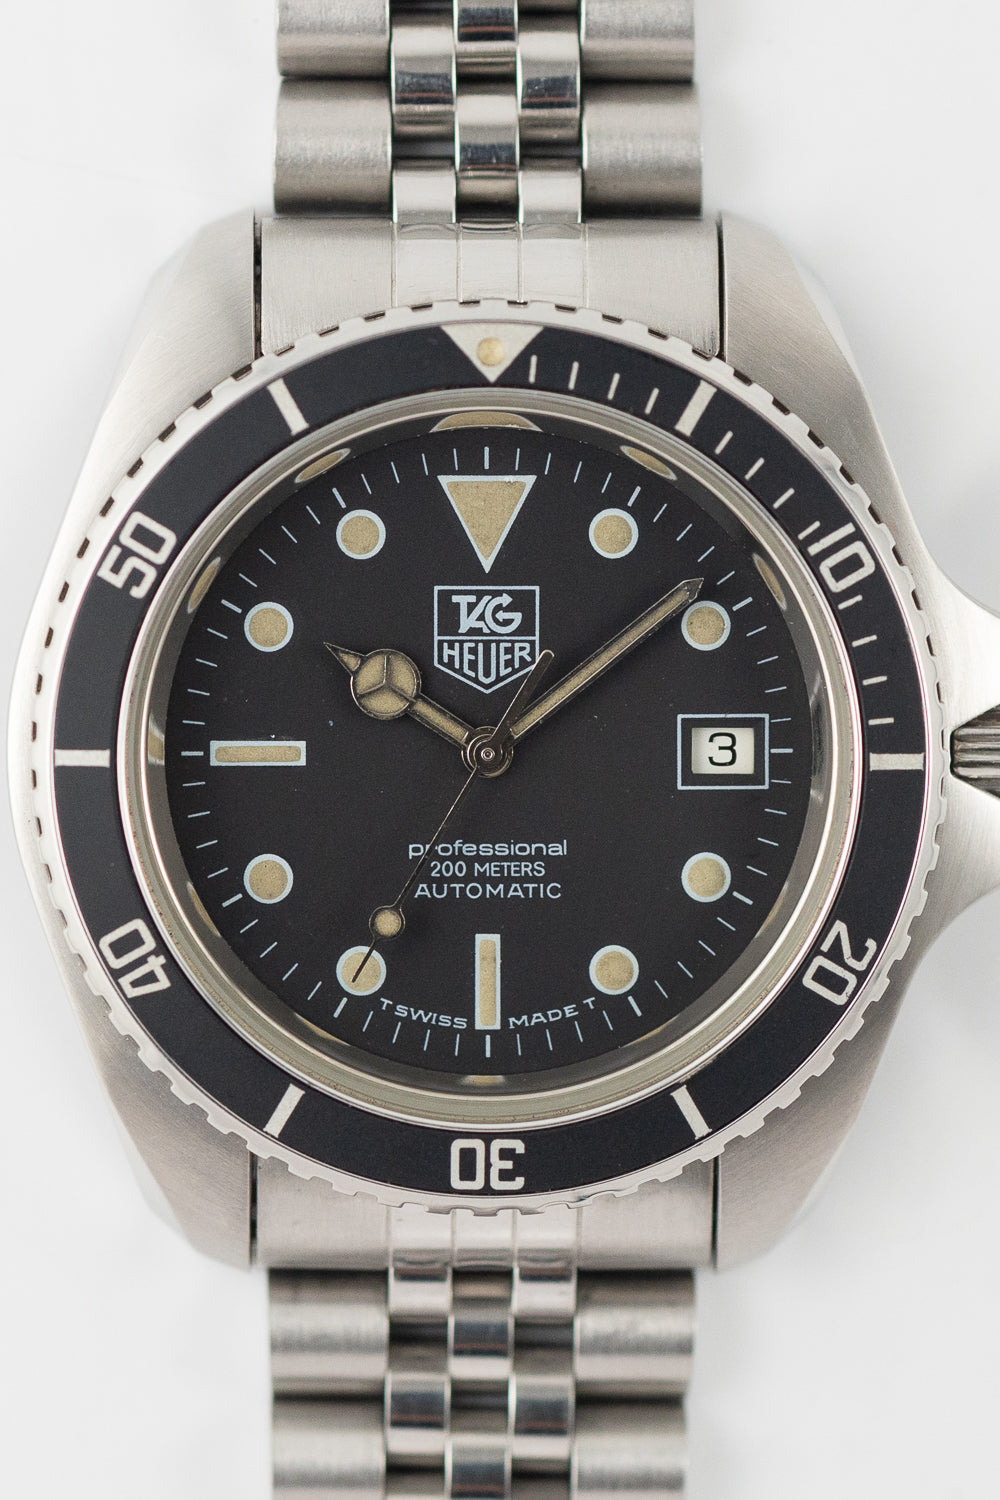 TAG HEUER 1000 Diver Professional 200m Ref.844/5 – TIMEANAGRAM